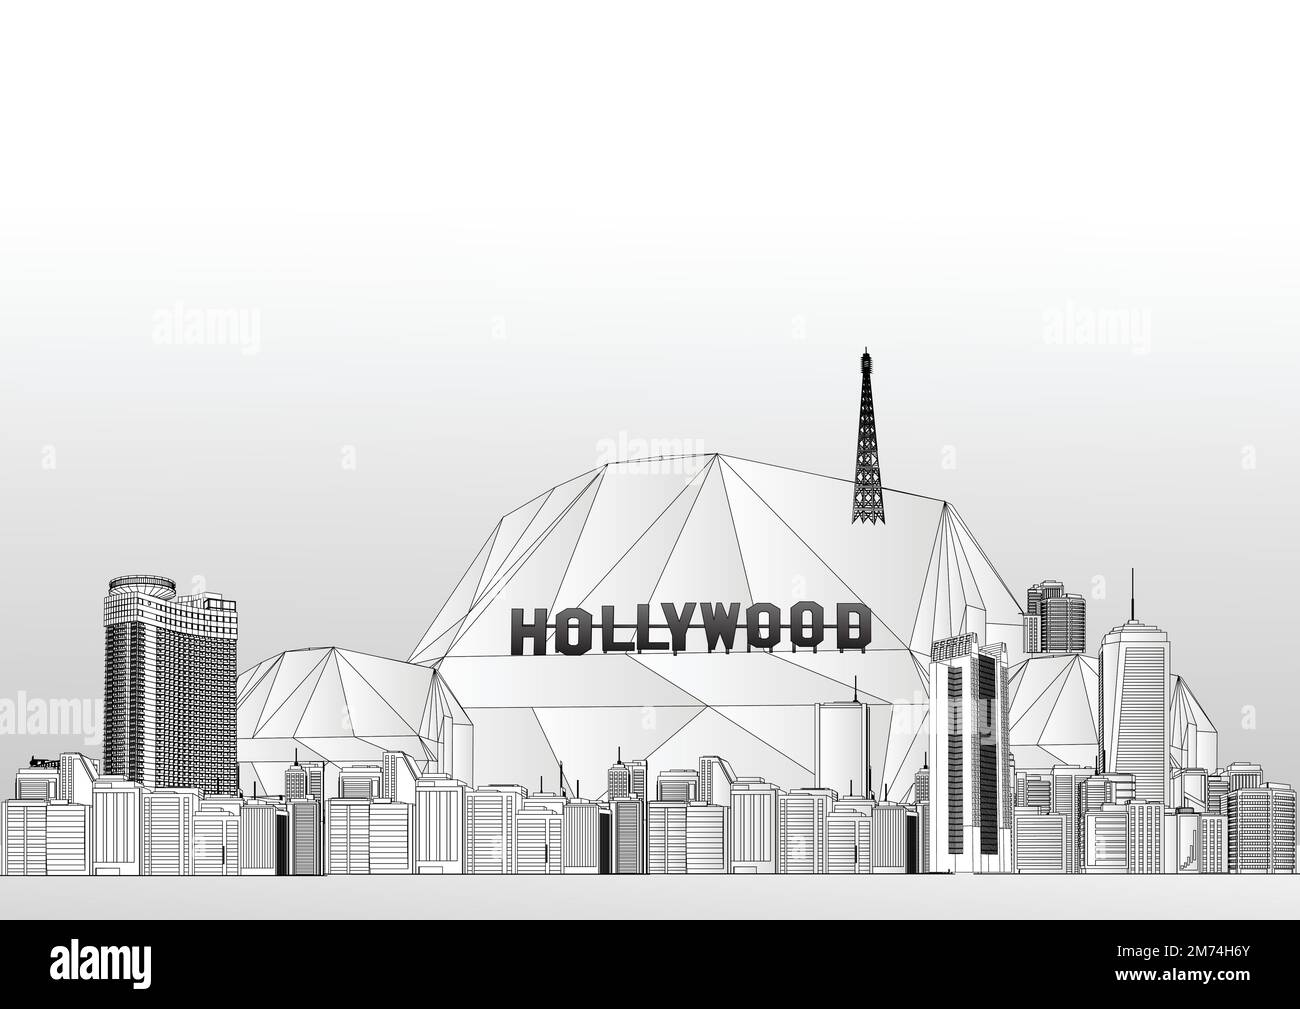 Beautiful Hollywood City Vector Illustration Stock Vector